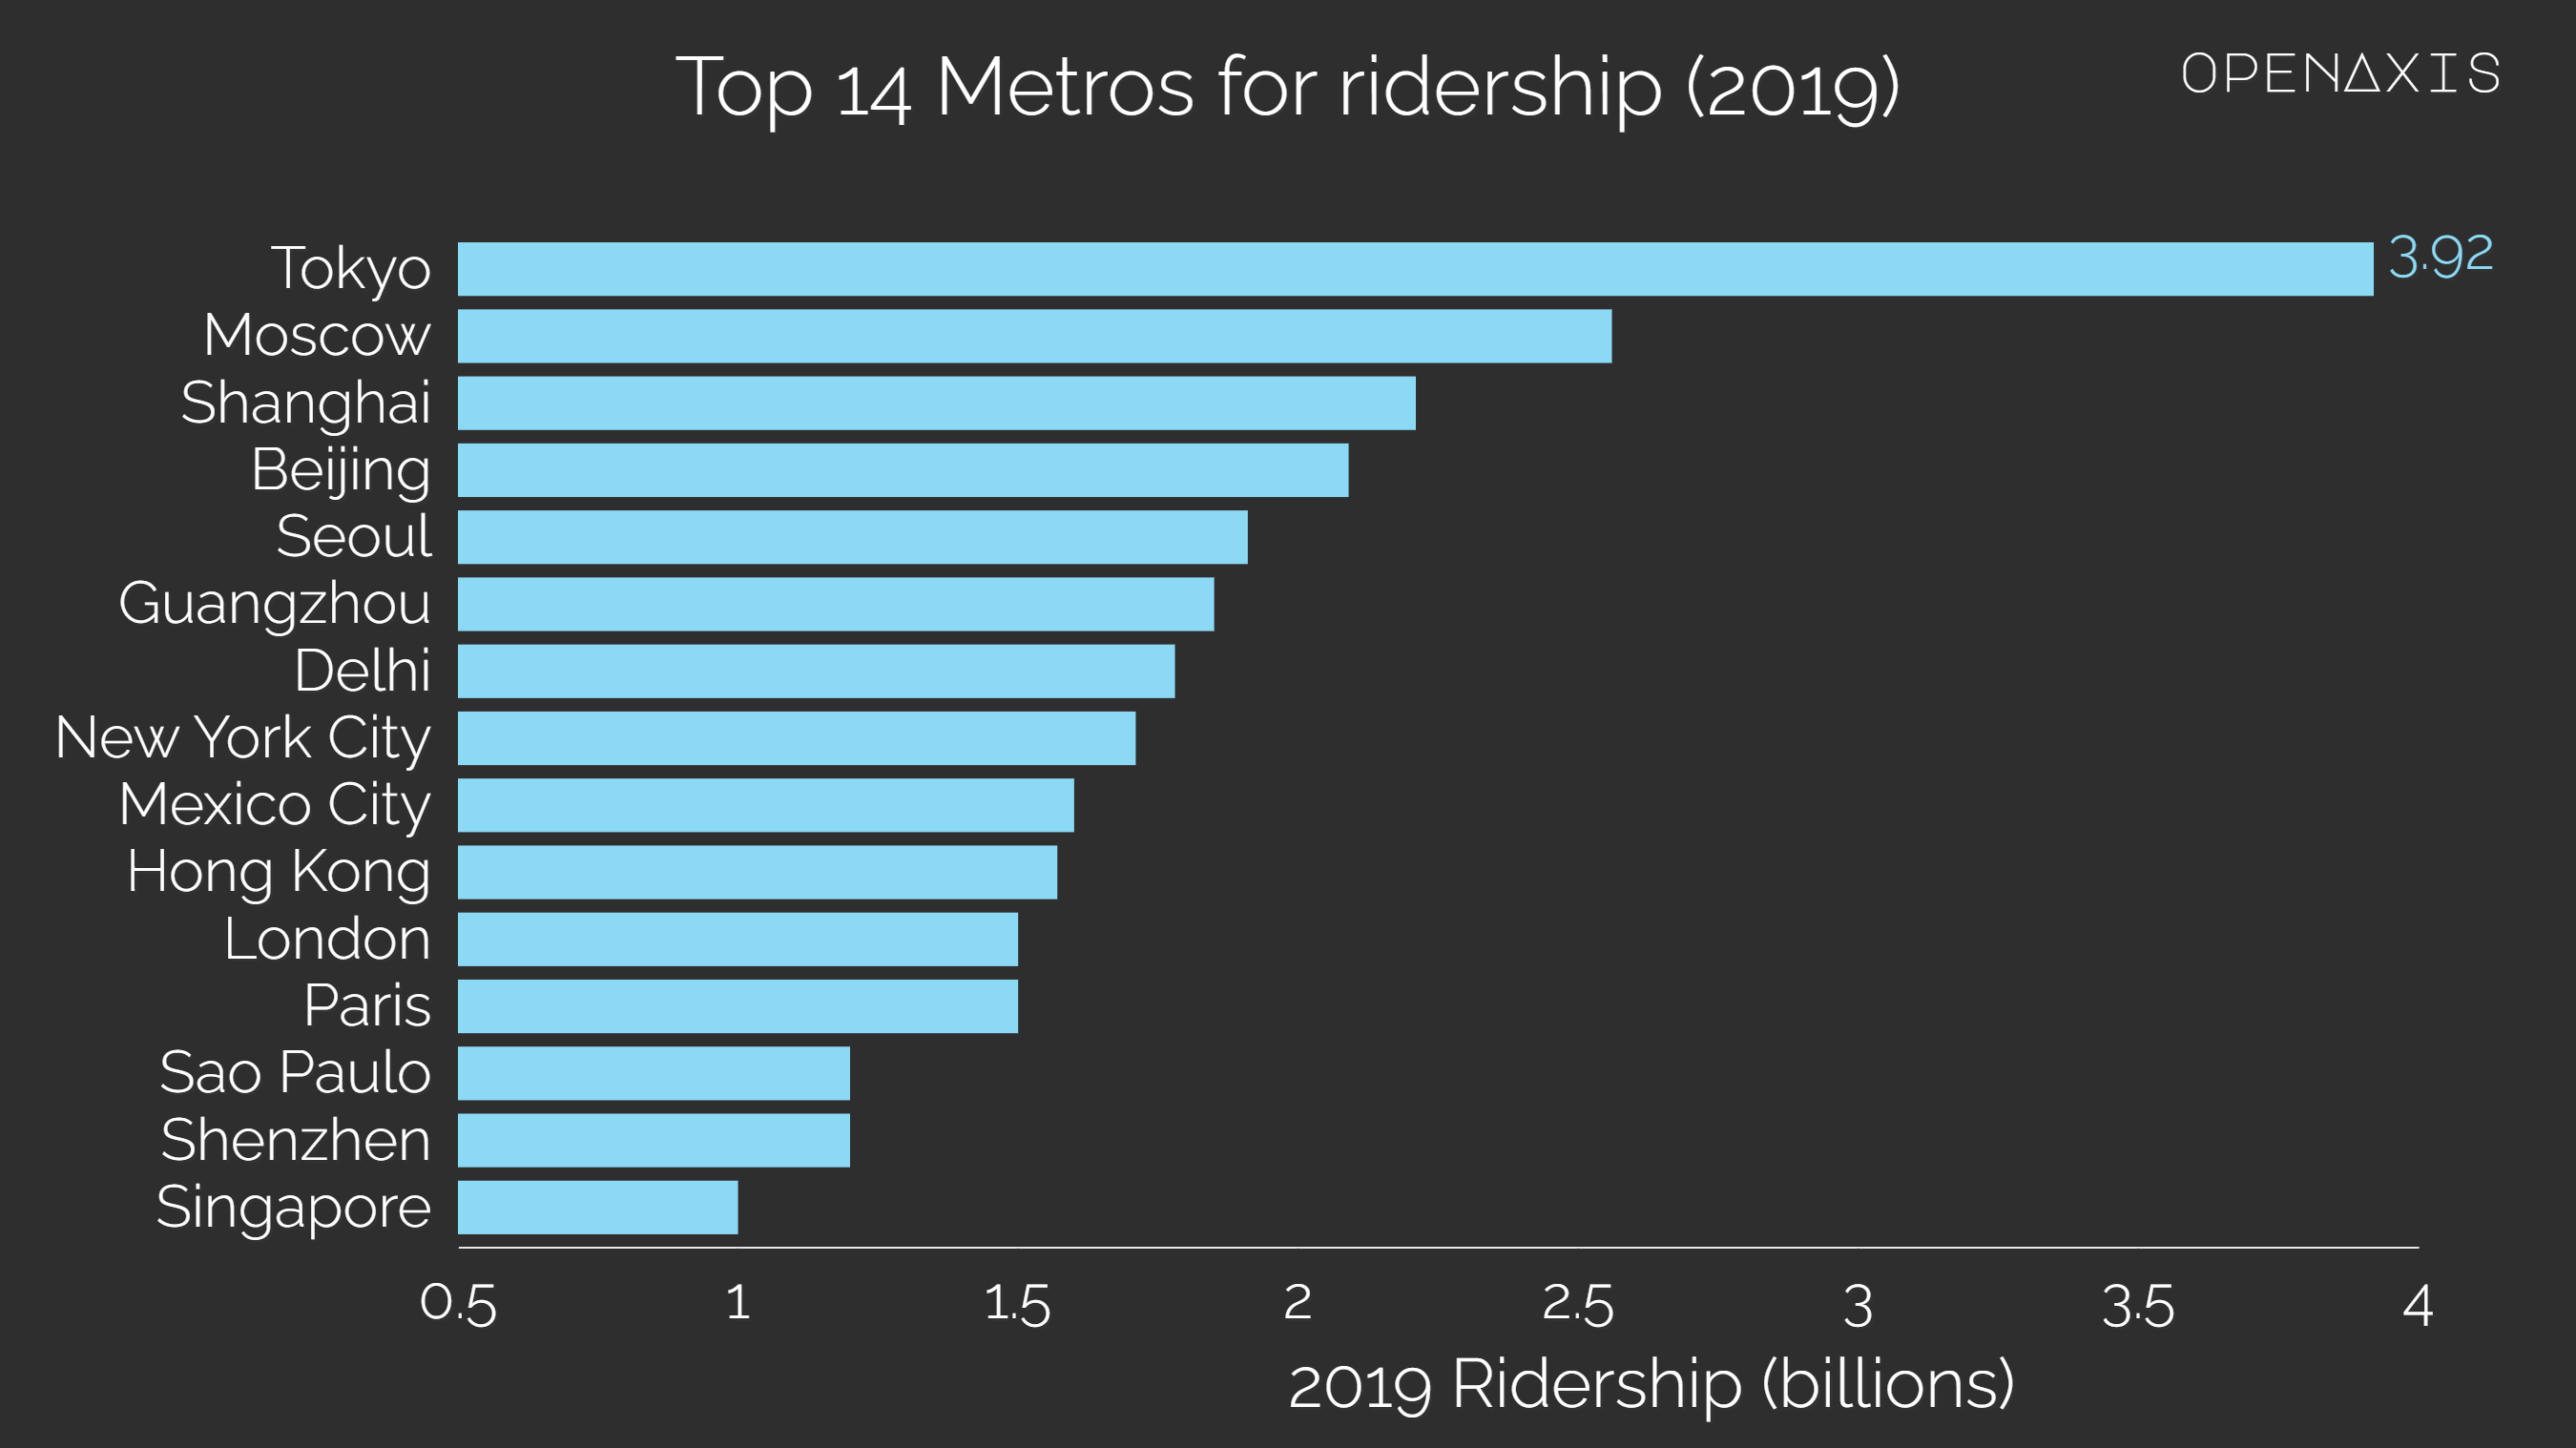 "Top 14 Metros for ridership (2019)"